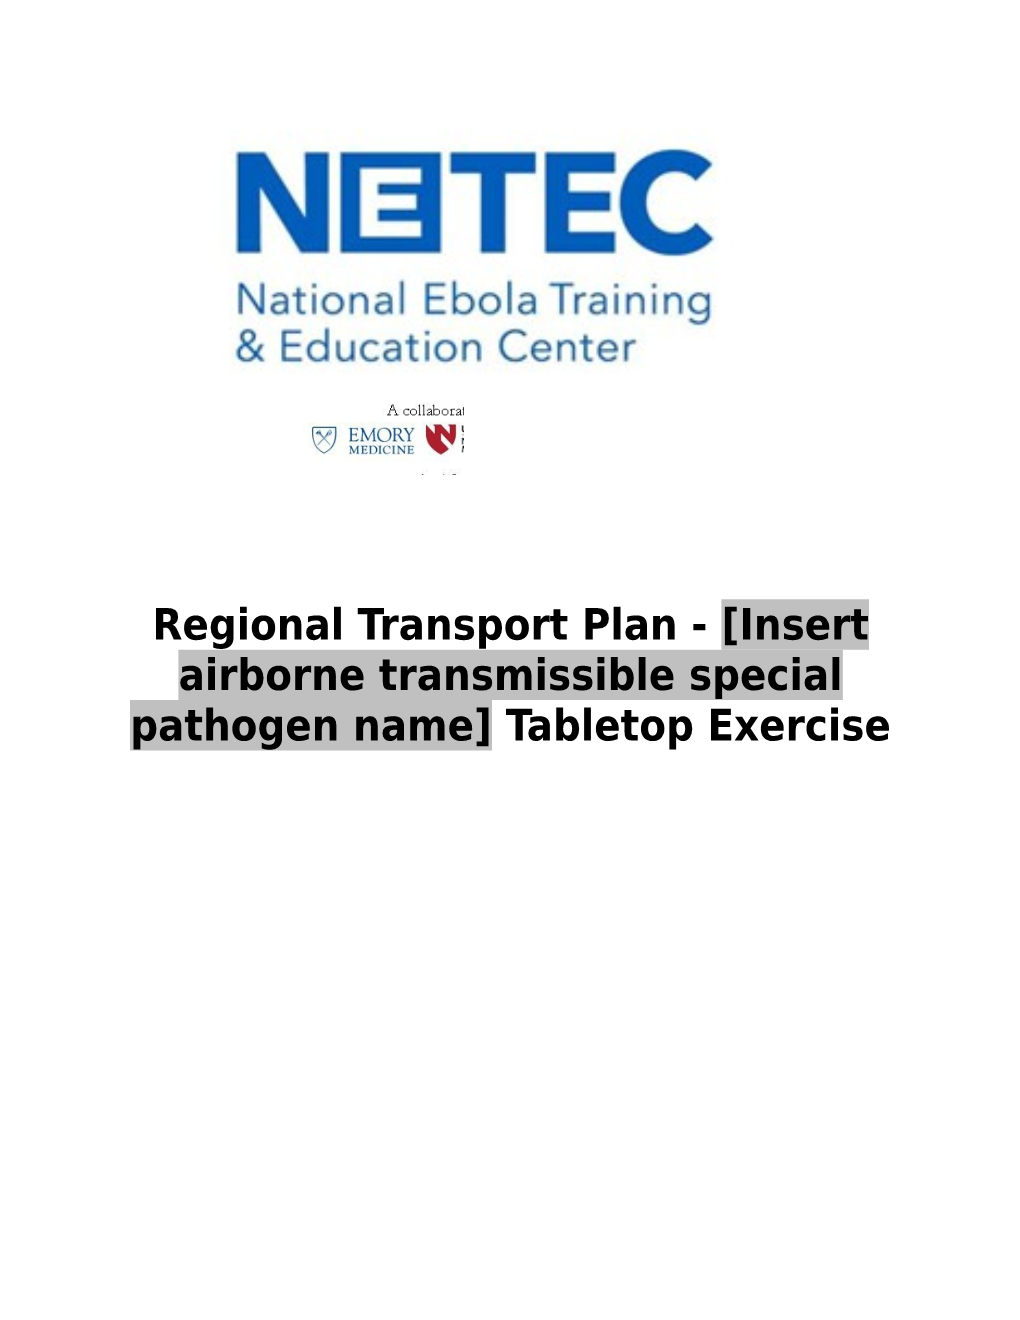 Regional Transport Plan - Insert Airborne Transmissible Special Pathogen Name Tabletop